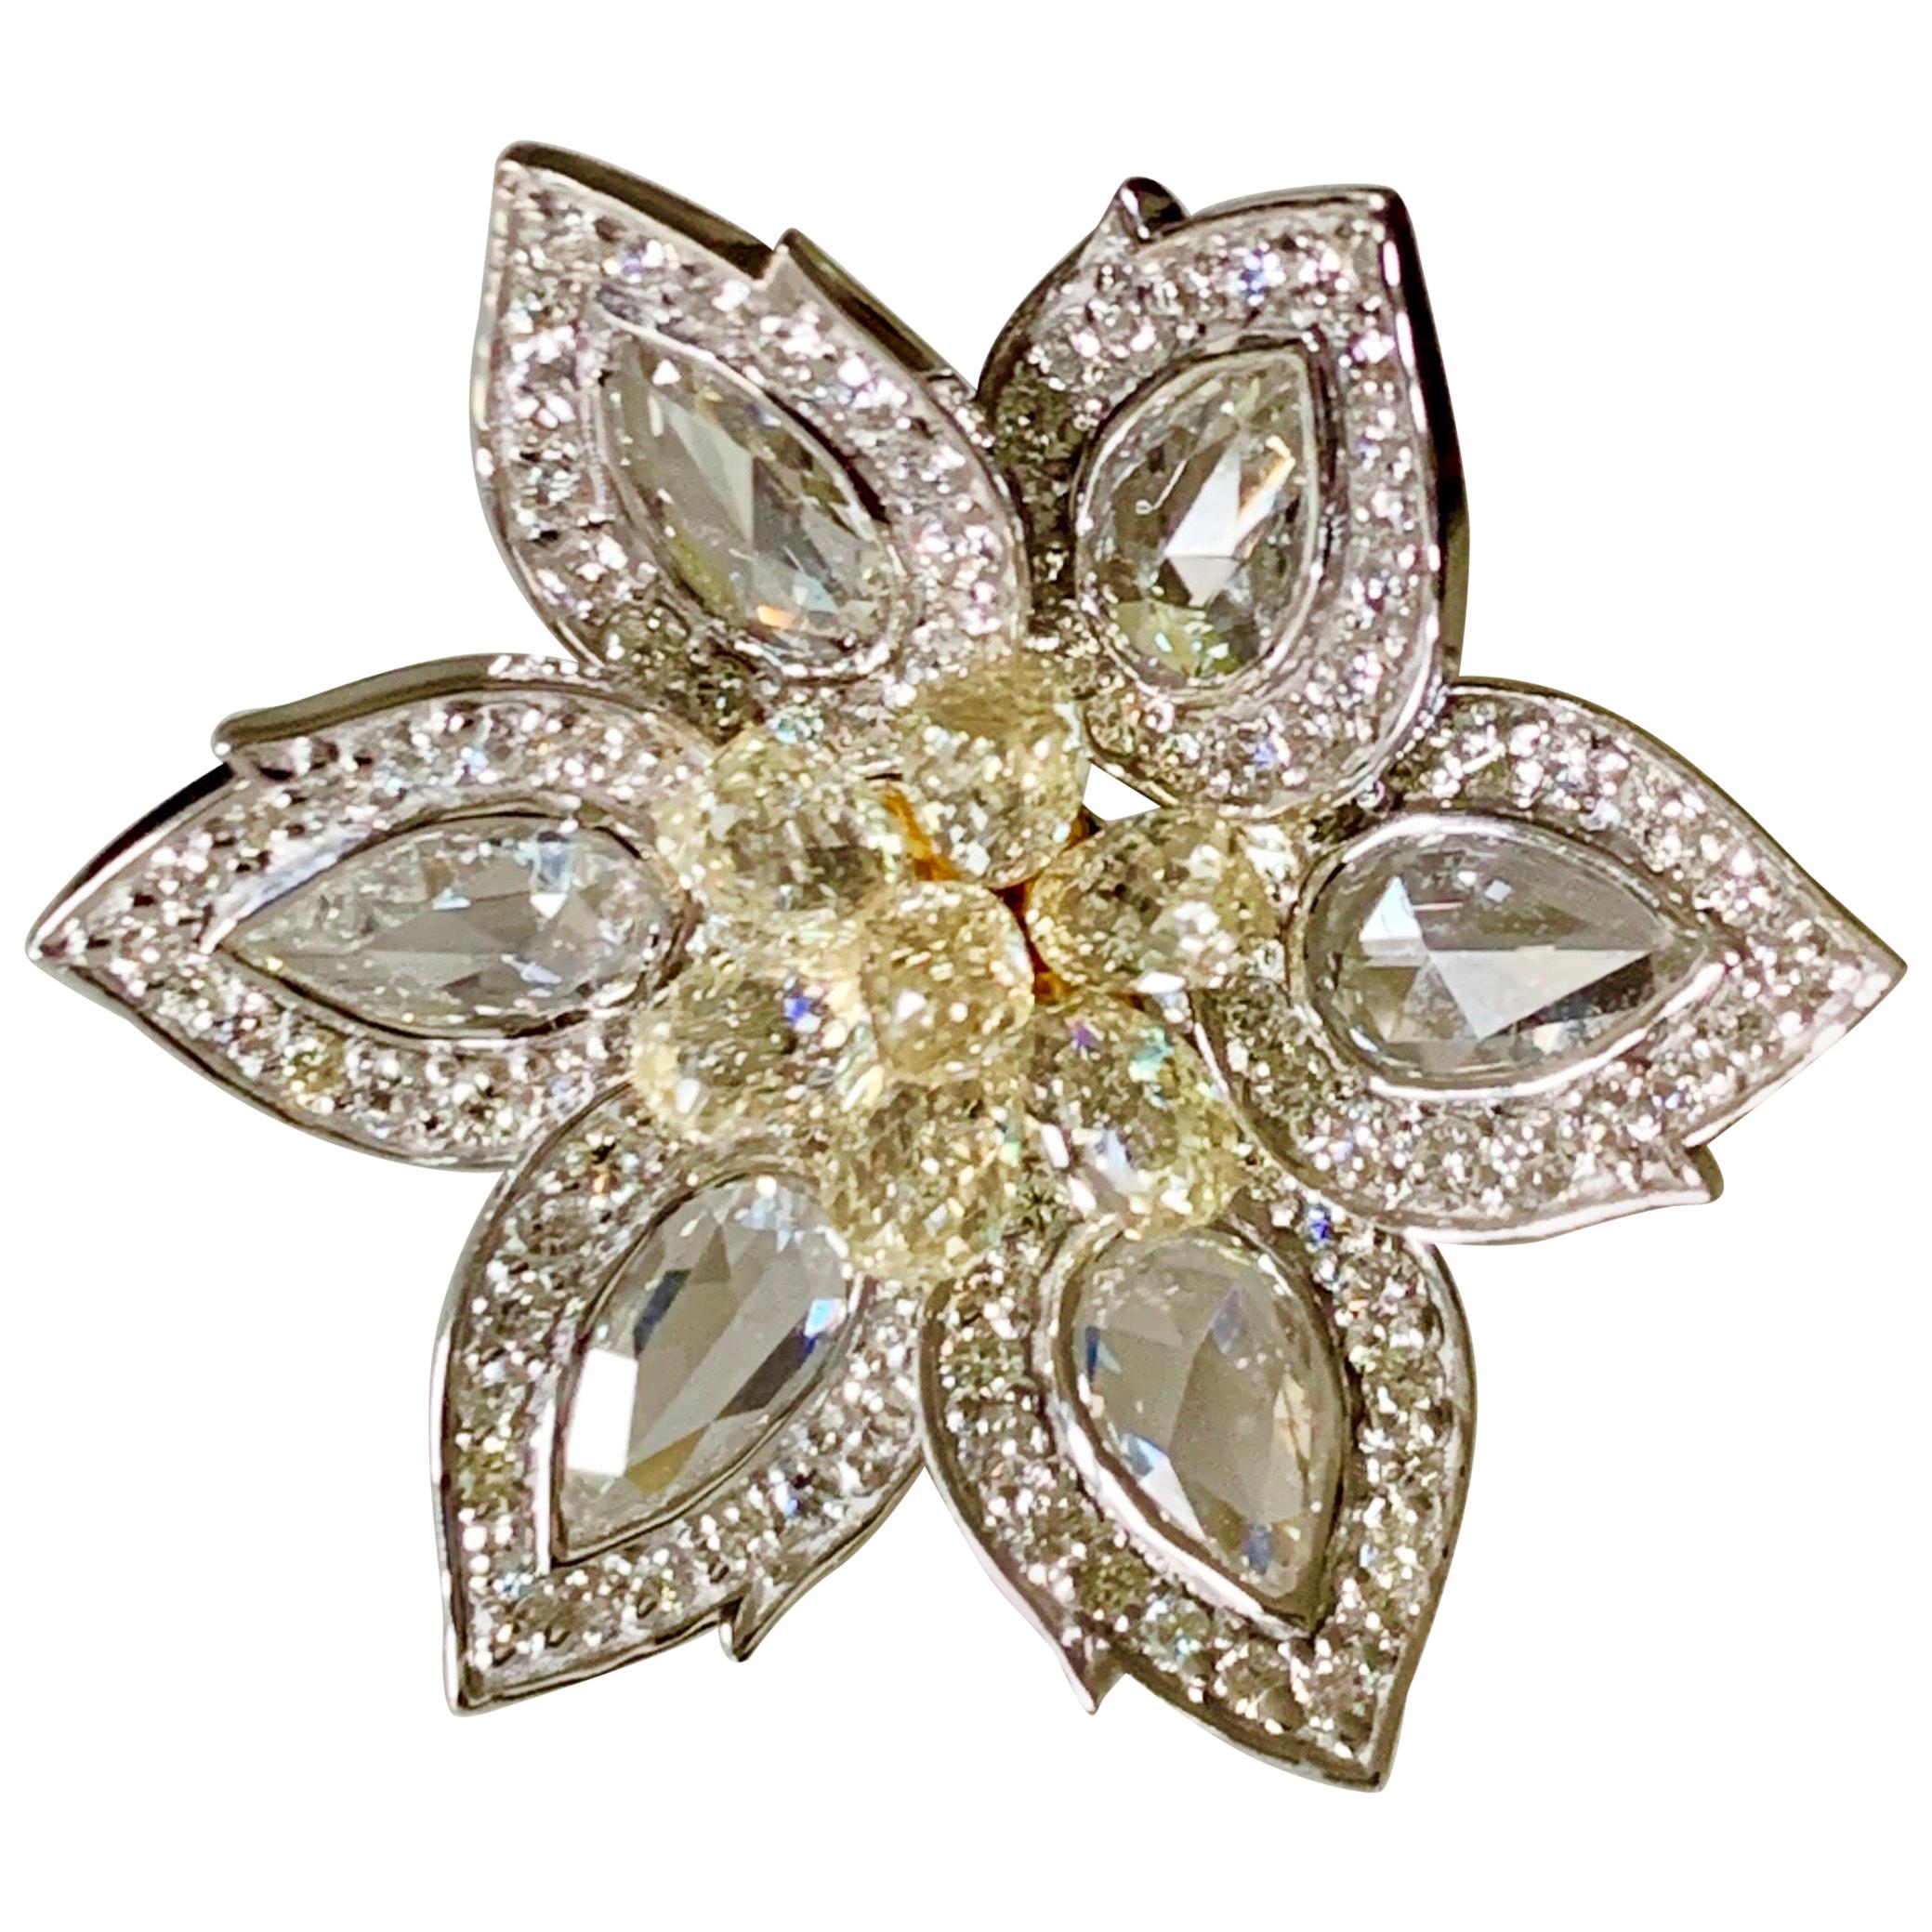 Rose Cut Diamond and Briolette Diamond Flower Ring in 18 Karat White Gold